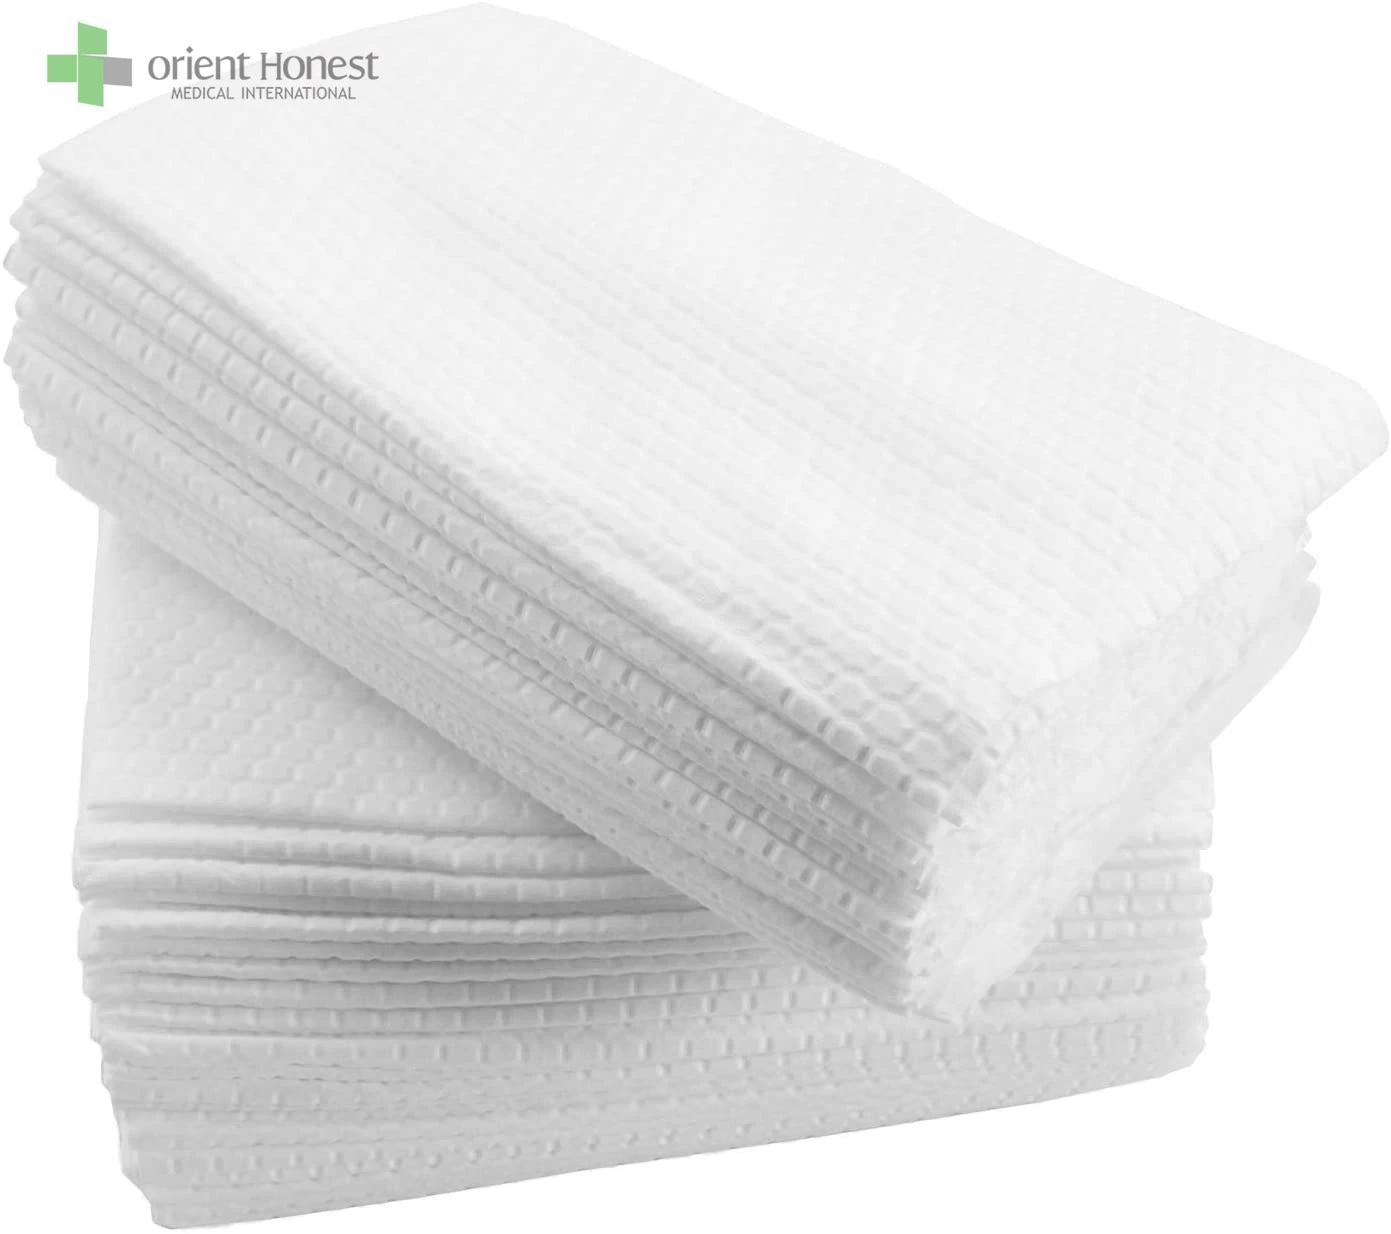 Plain Cotton Soft Towel Wet and Dry Use Hubei Wholesaler